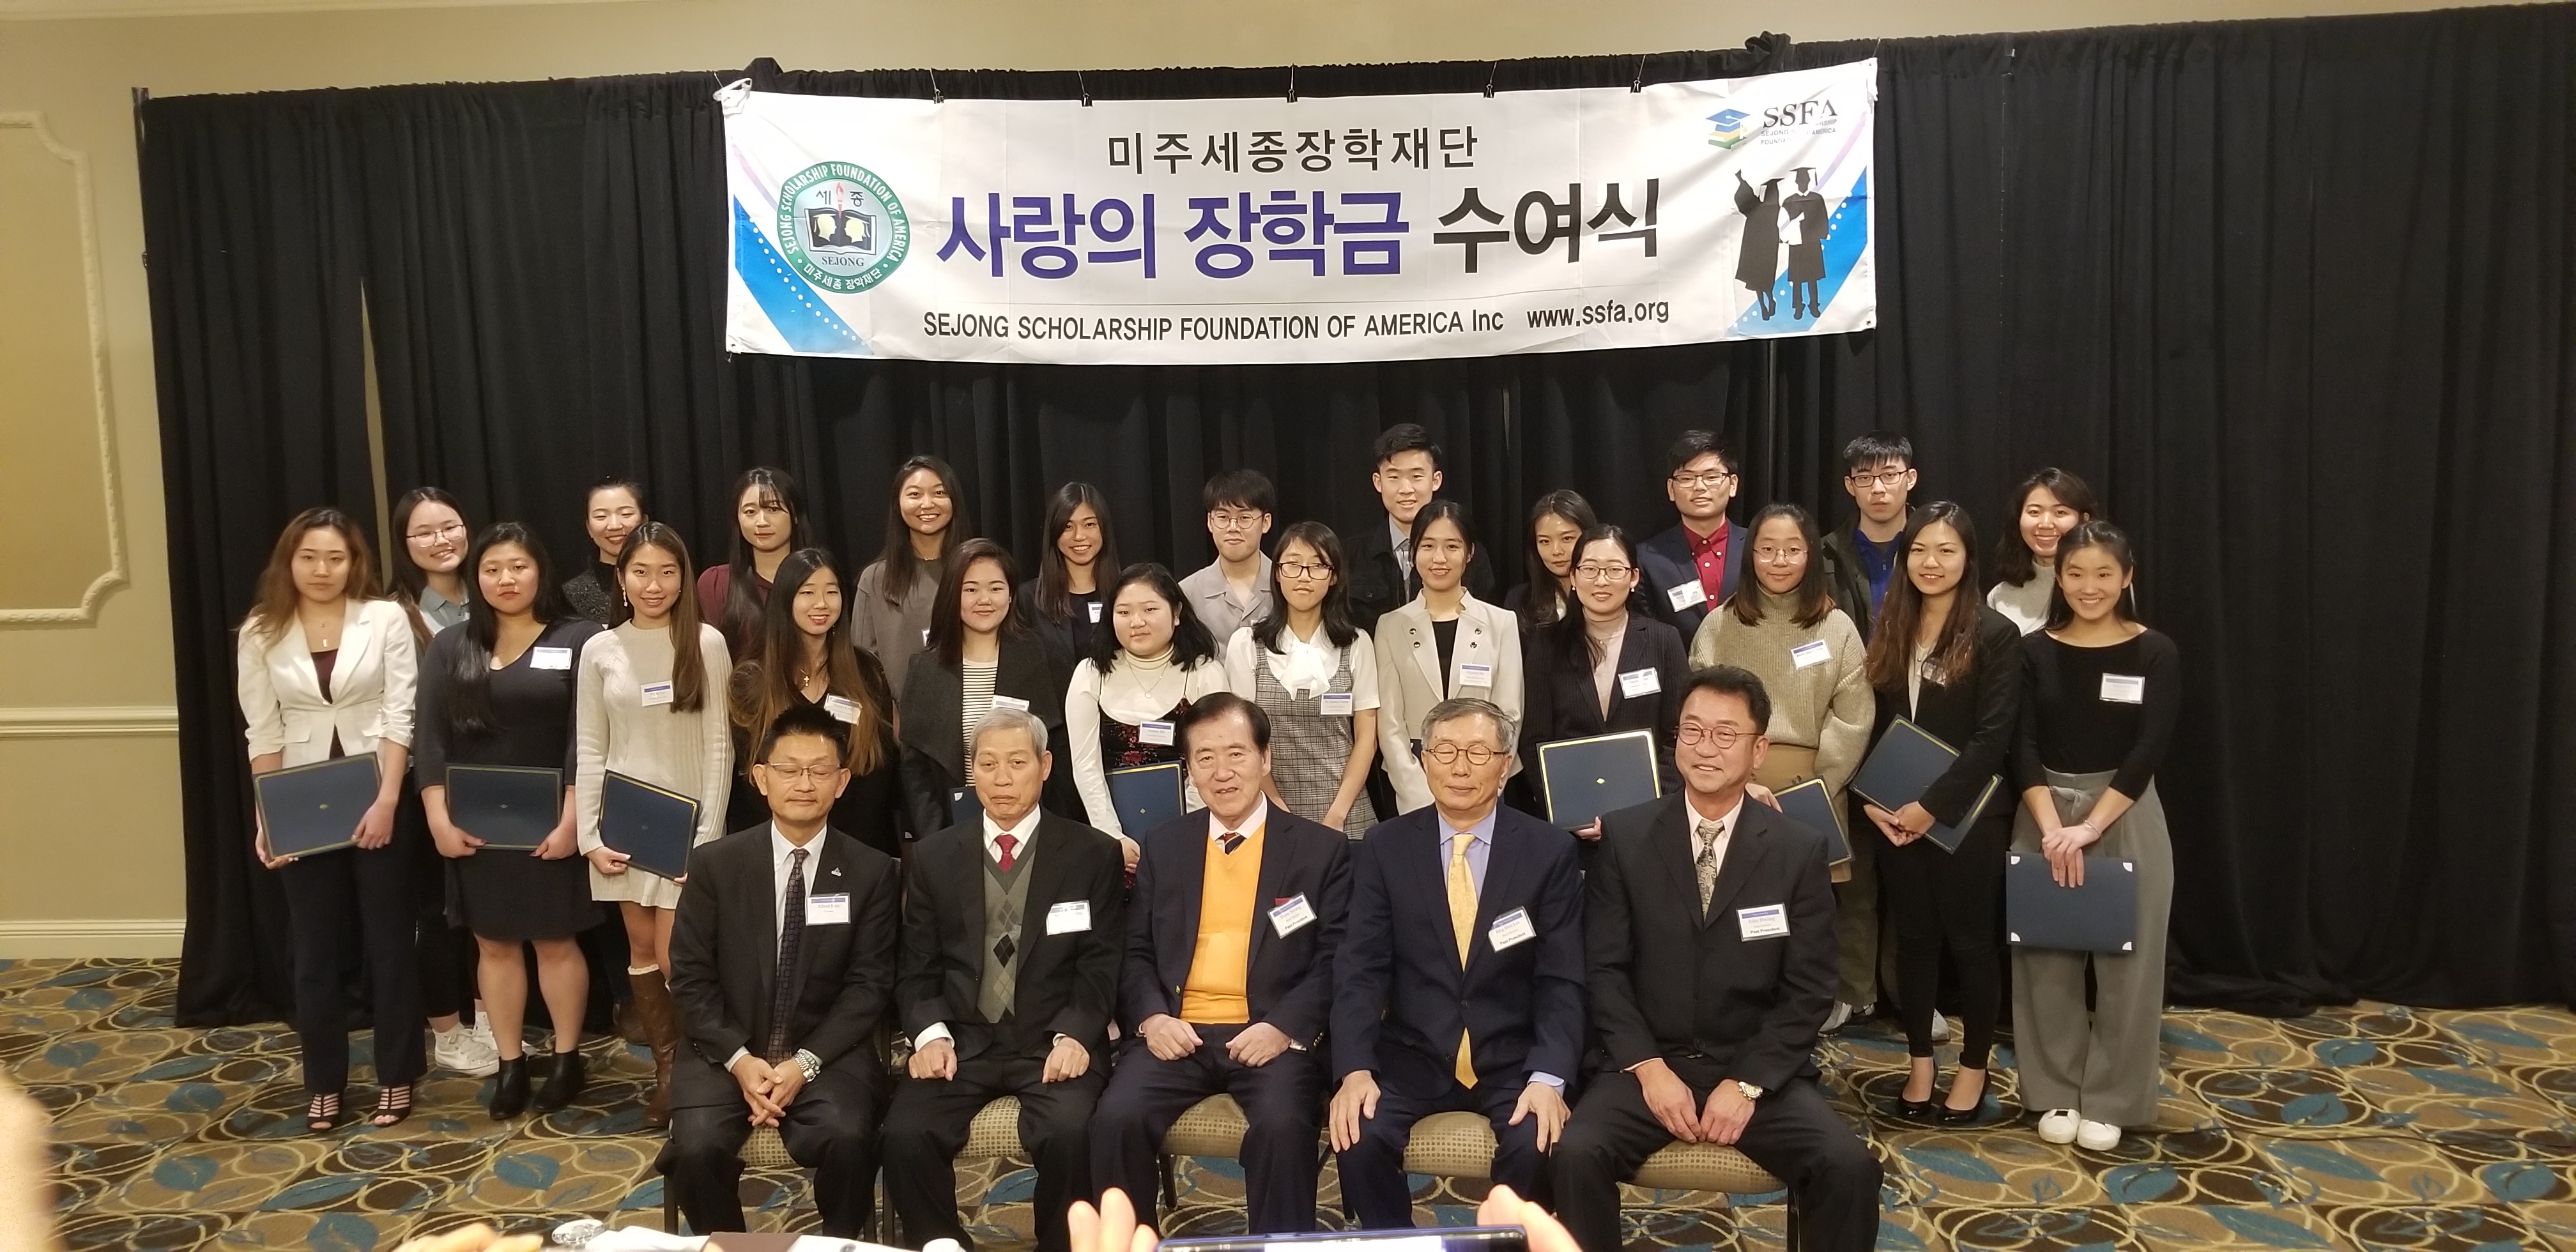 2019 Sejong Scholarship Foundation of America (SSFA) Scholarship Award Ceremony #1